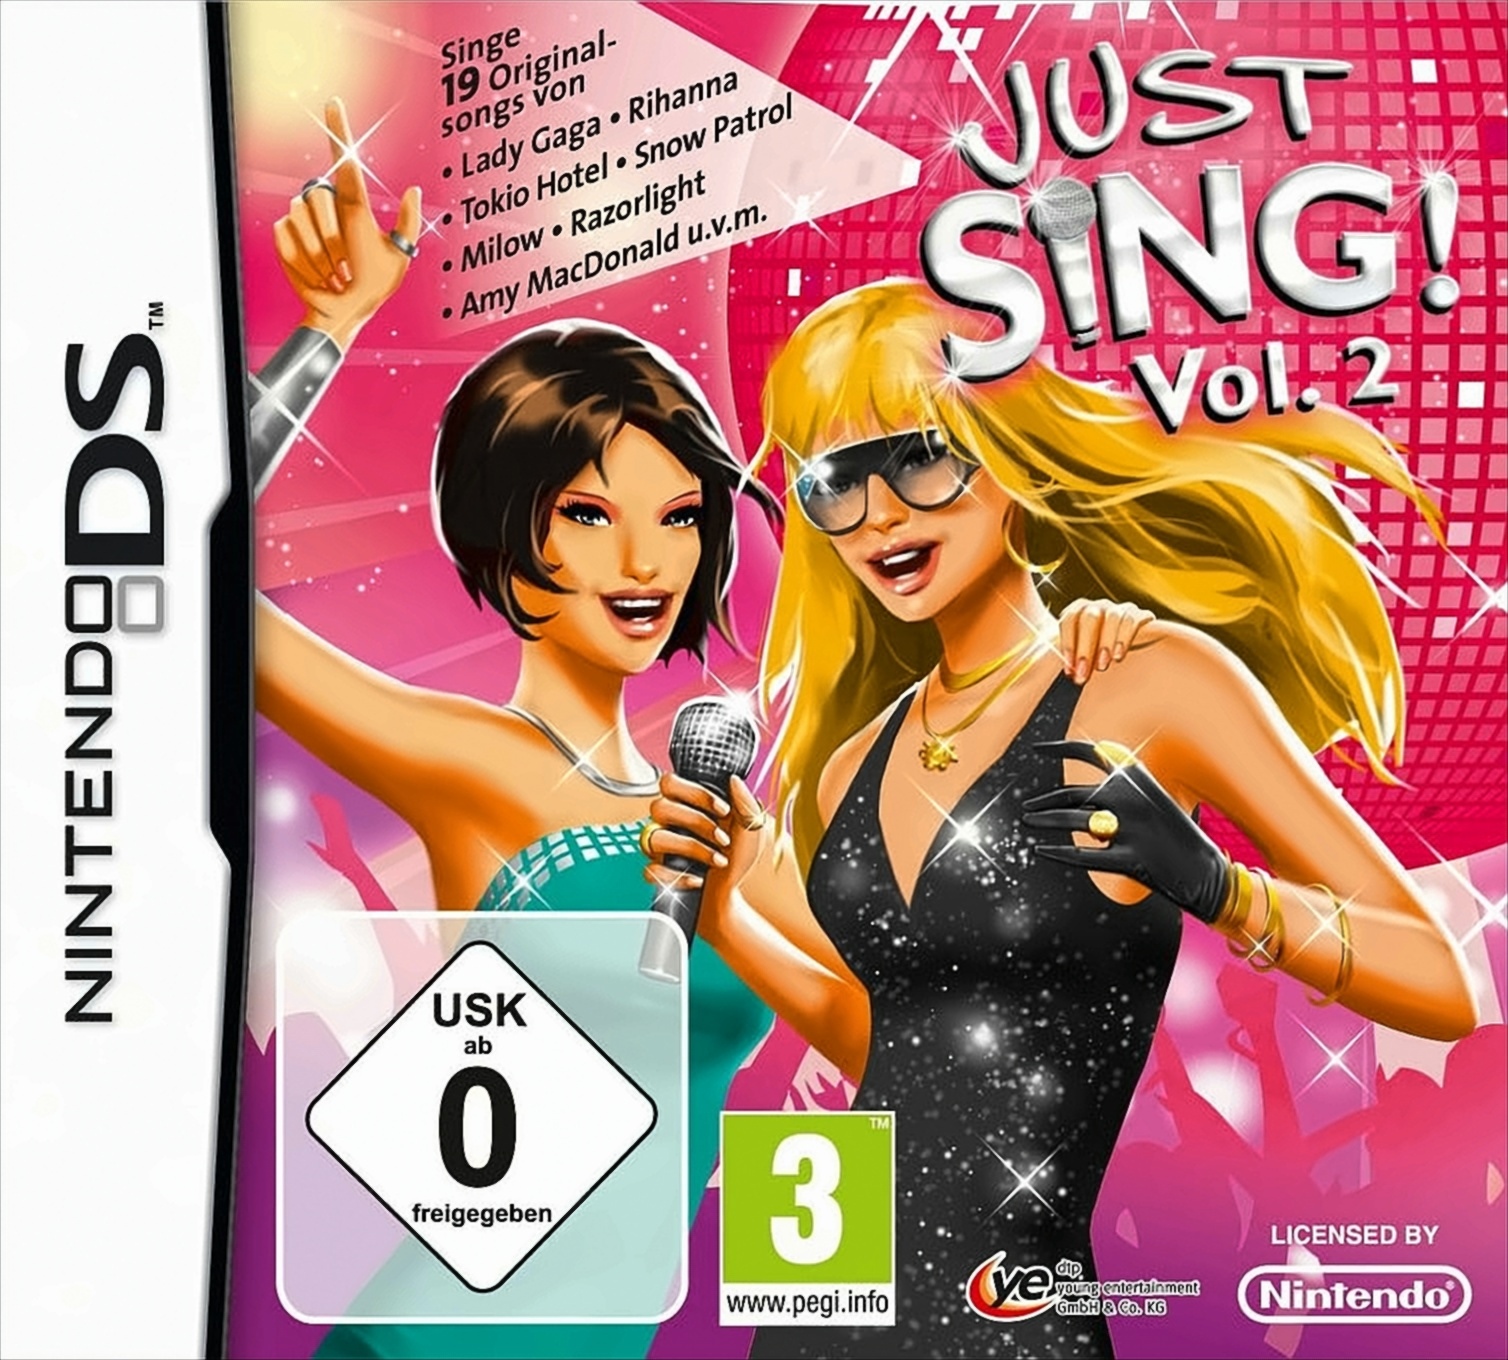 Vol. - Just [Nintendo 2 DS] Sing!